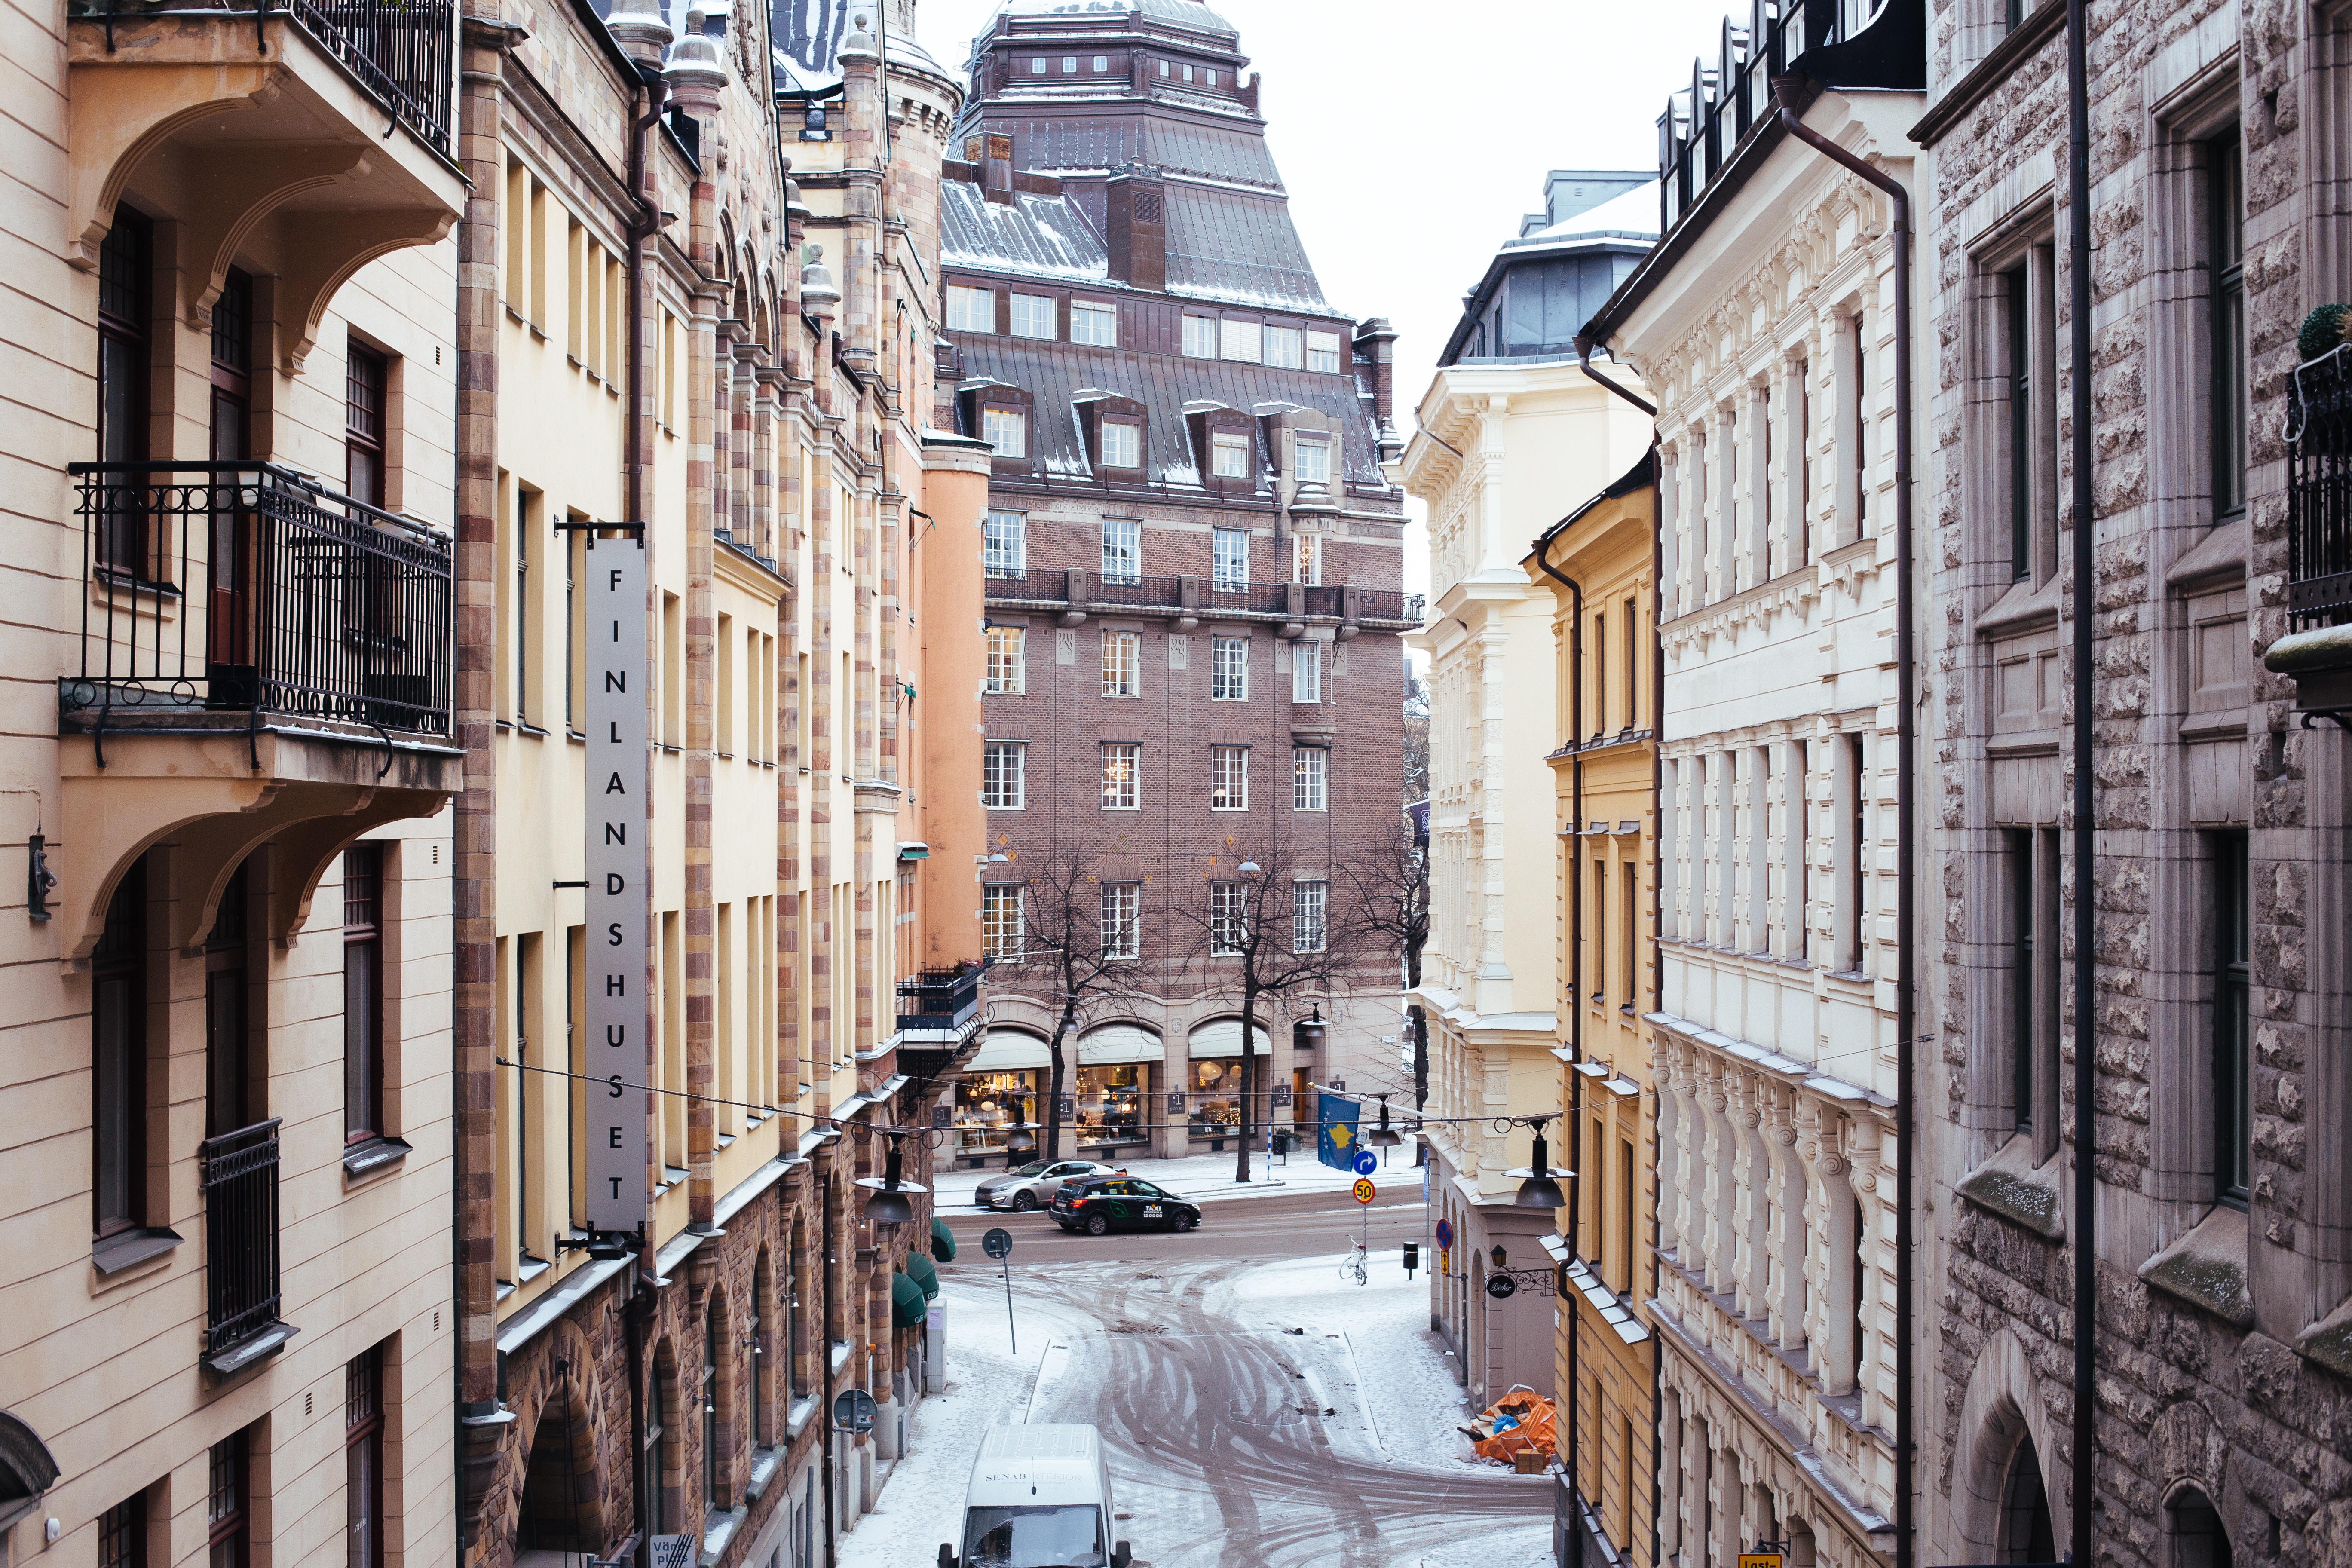 winter in stockholm